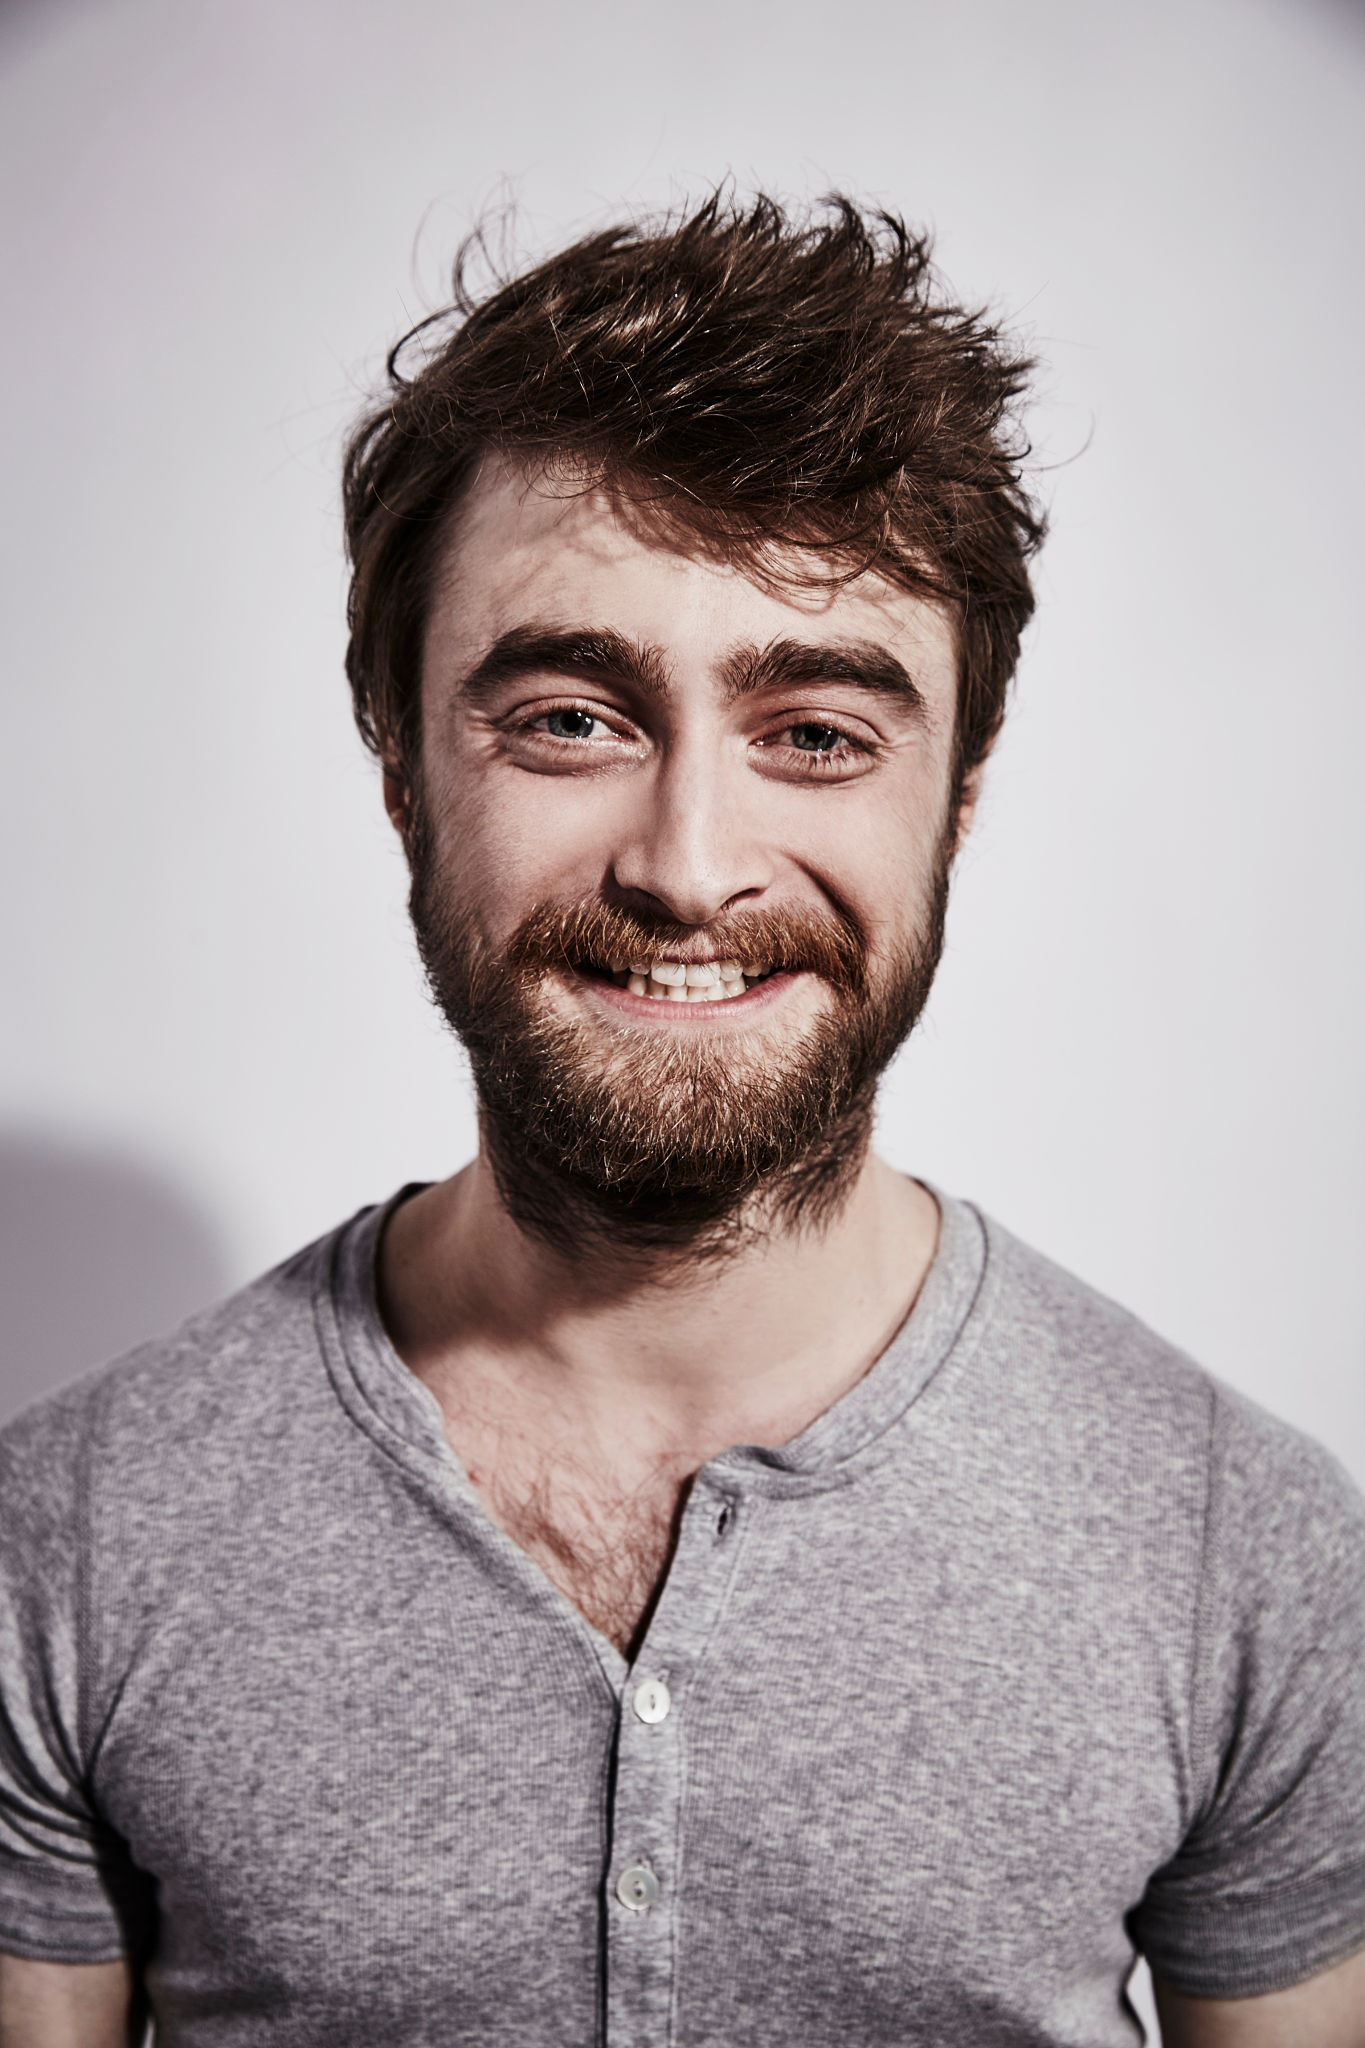 Daniel Radcliffe - Actor - CineMagia.ro